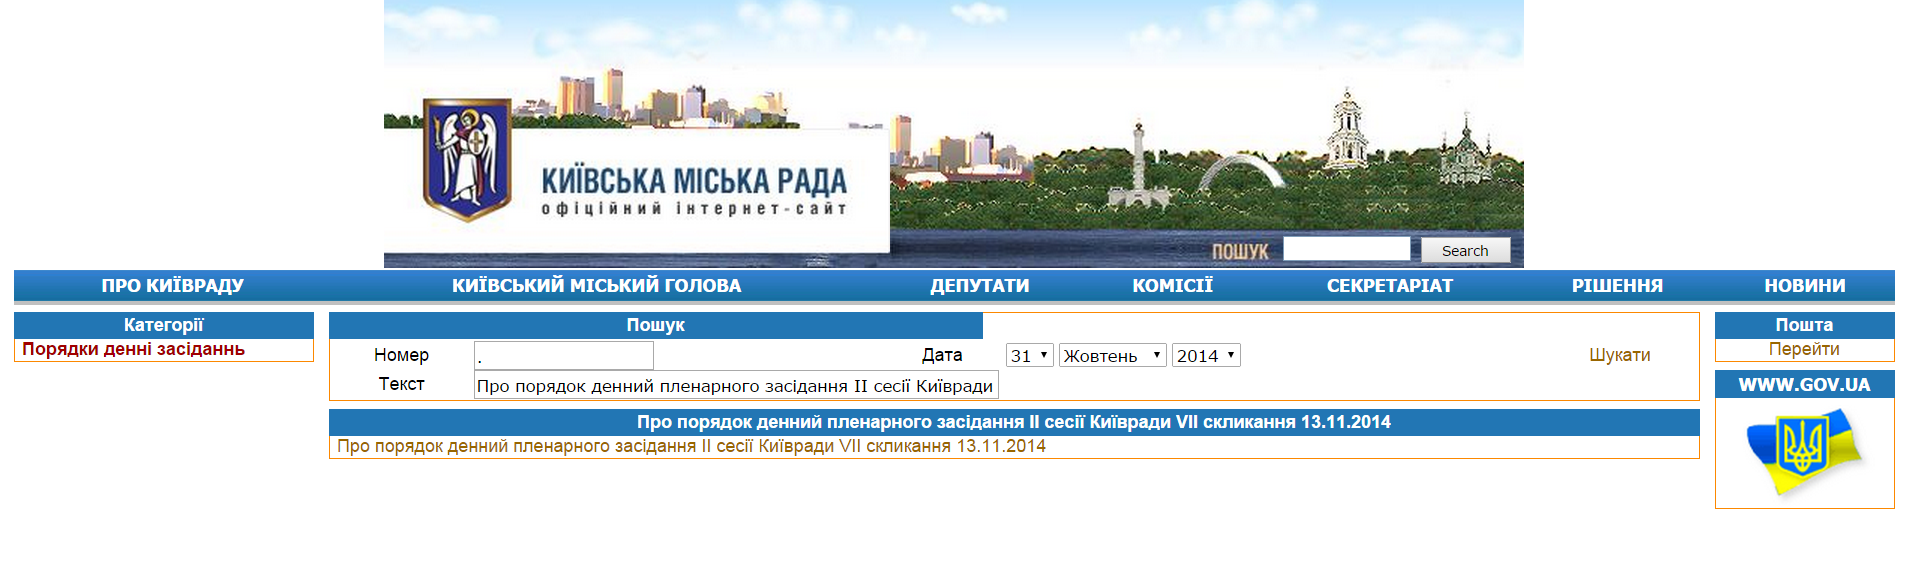 http://kmr.gov.ua/decree_poryadki.asp?Id=7438